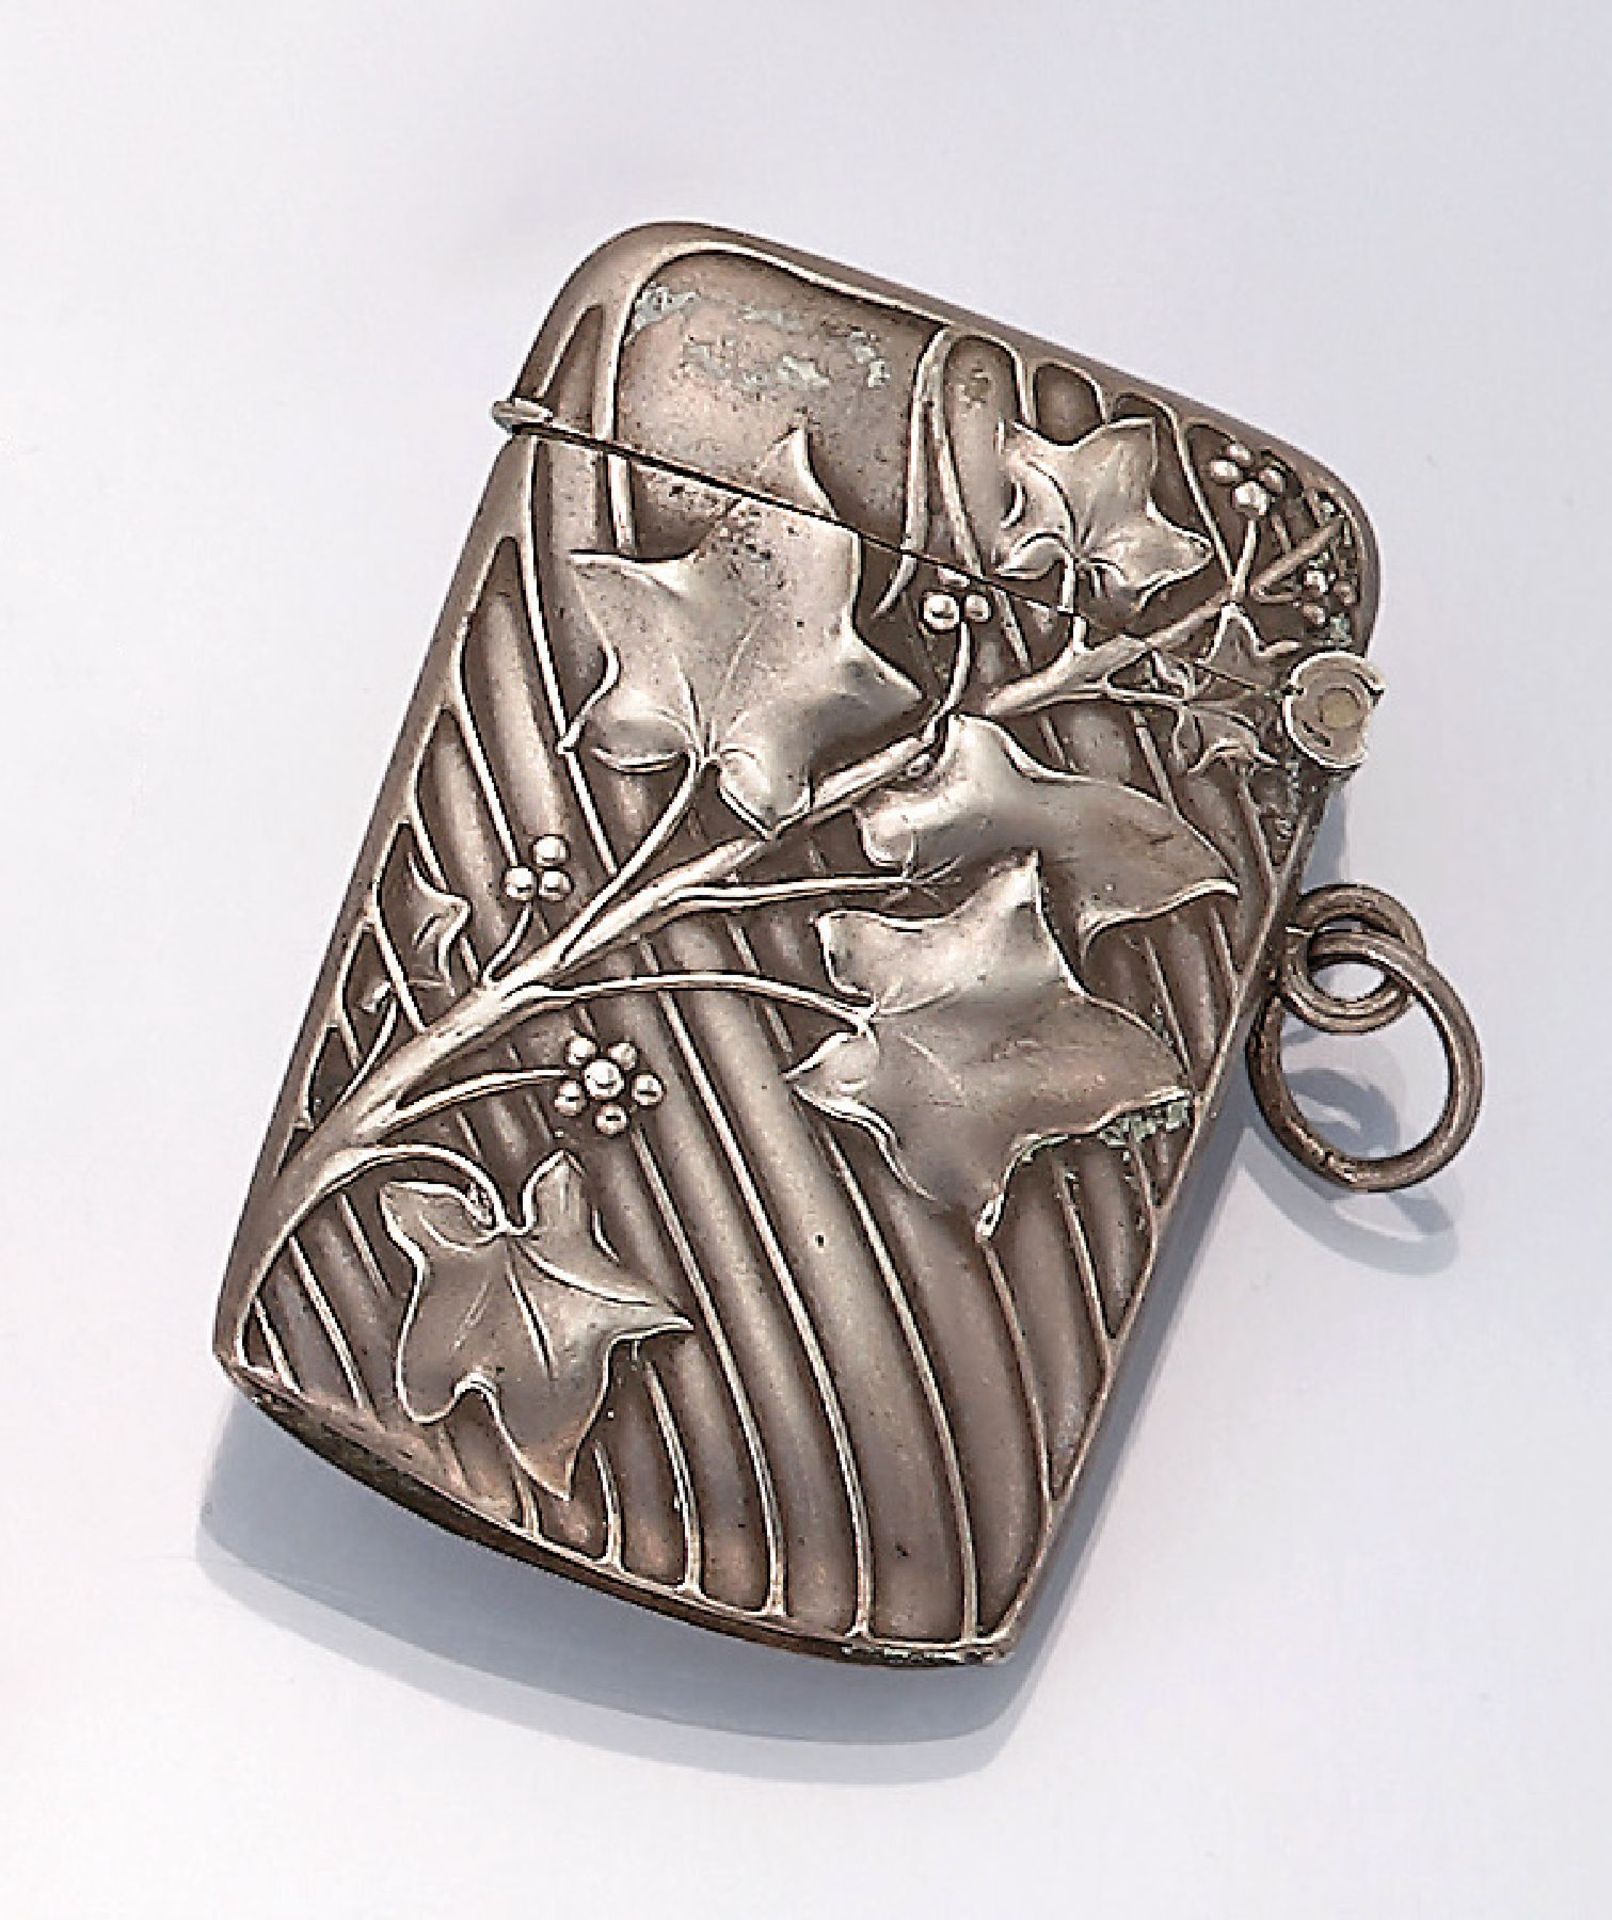 Matchstick case , german approx. 1900s, 800 silver, manufacturer's brand Lutz & Wesselton, lug,